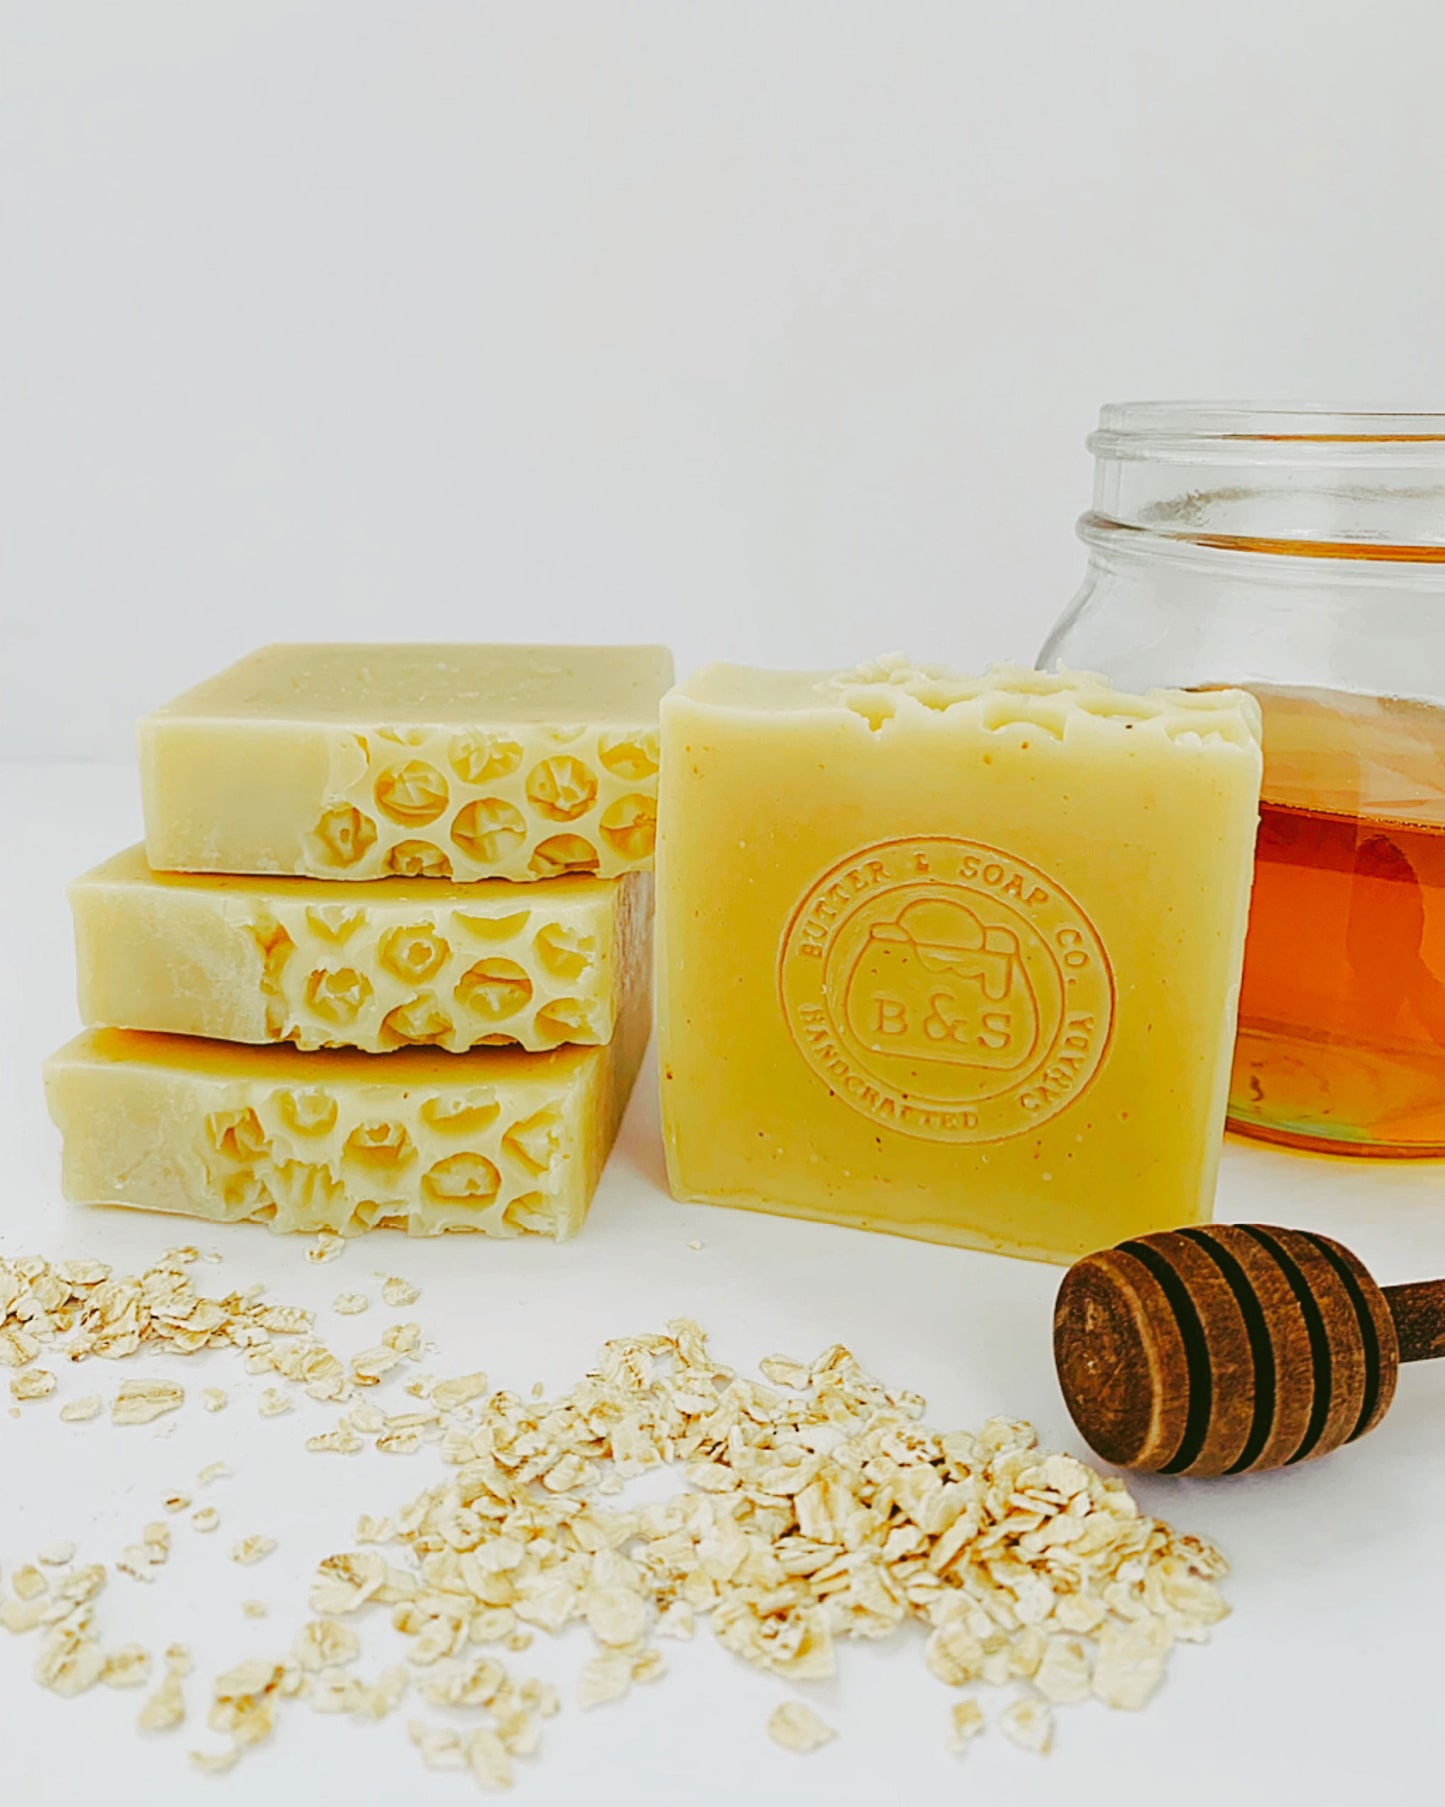 All Natural Honey Oat Shea Butter Soap Bar (unscented)